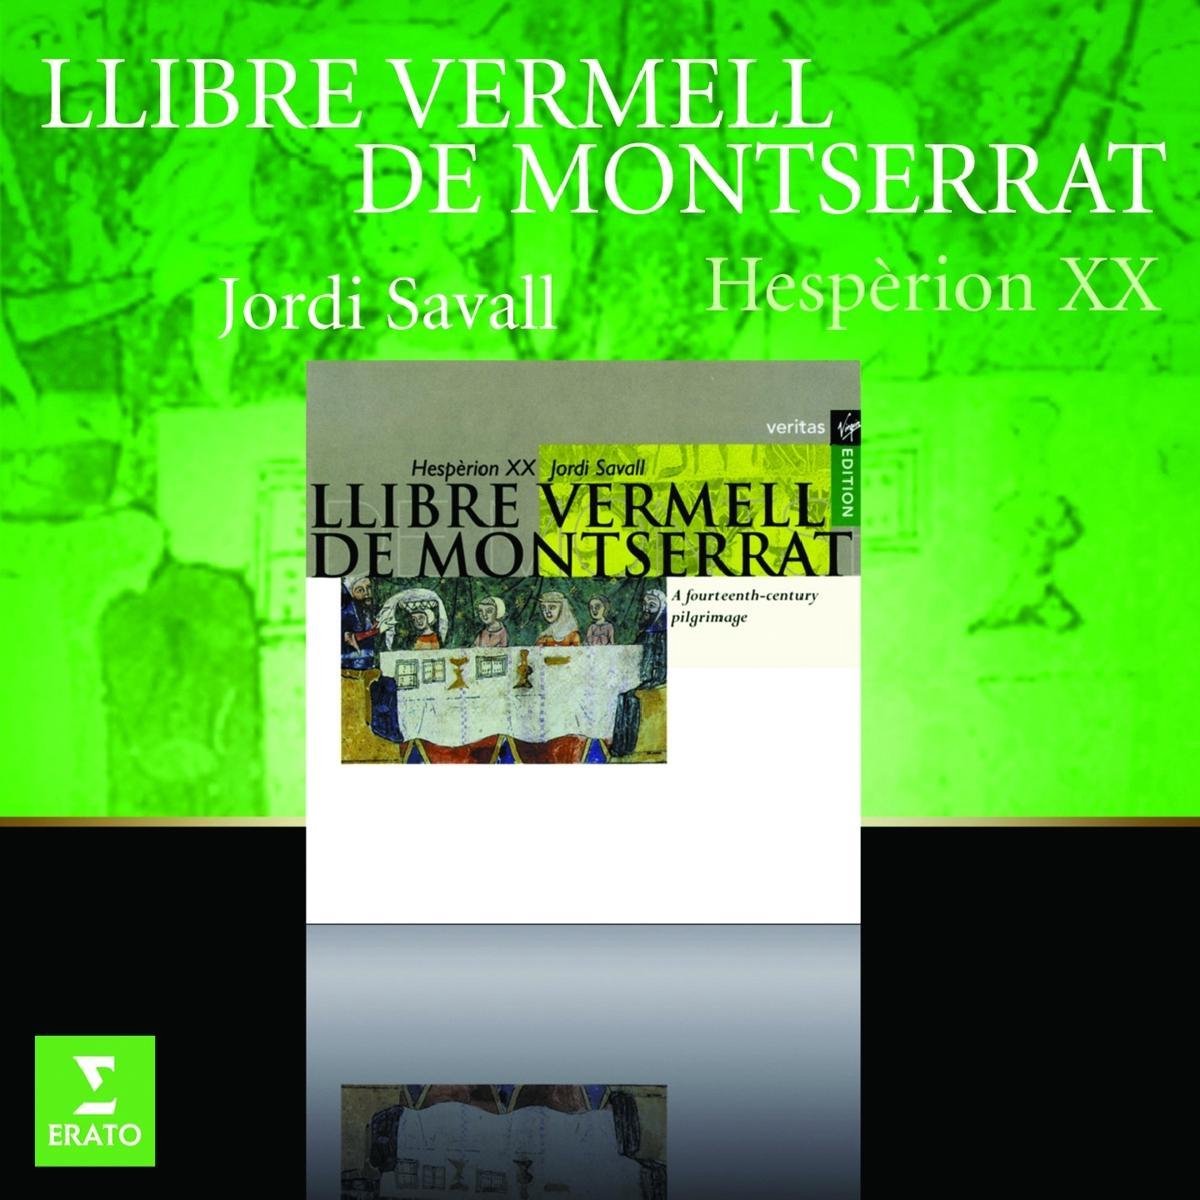 Hespèrion Xxi - Llibre Vermell de Montserrat (Klassieke Muziek CD) - Jordi Savall